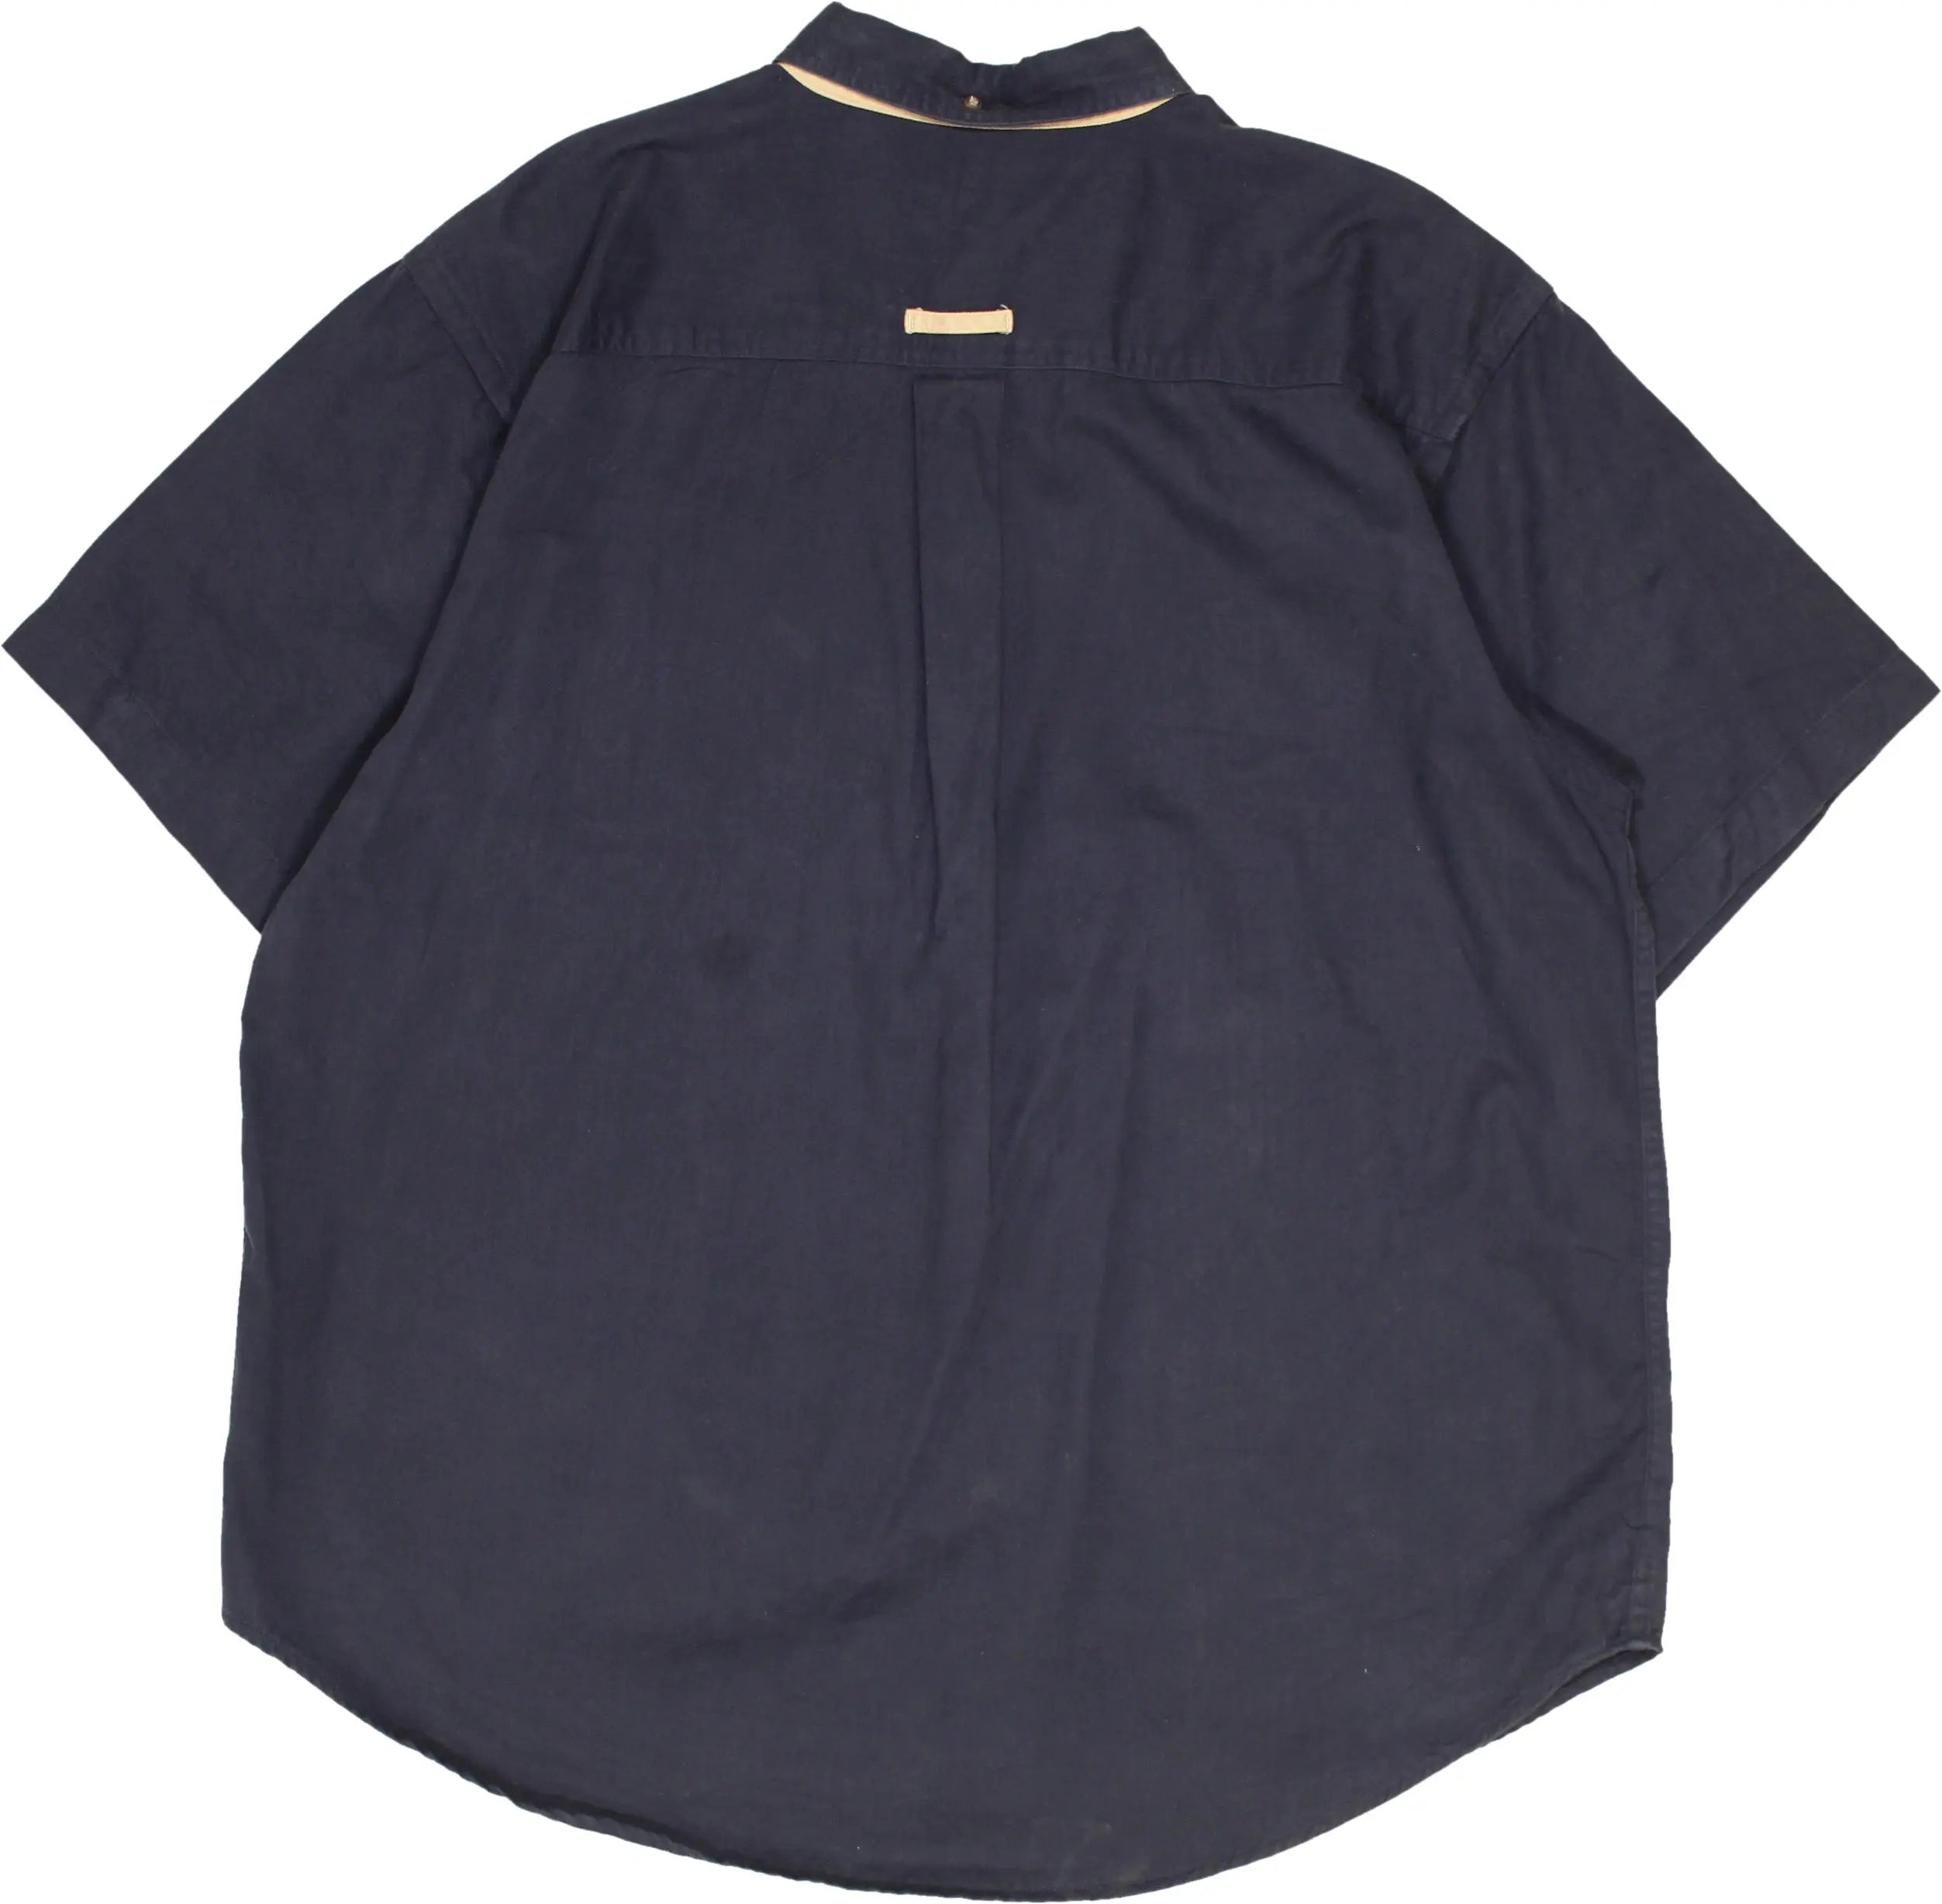 Blue Plains - Shirt- ThriftTale.com - Vintage and second handclothing